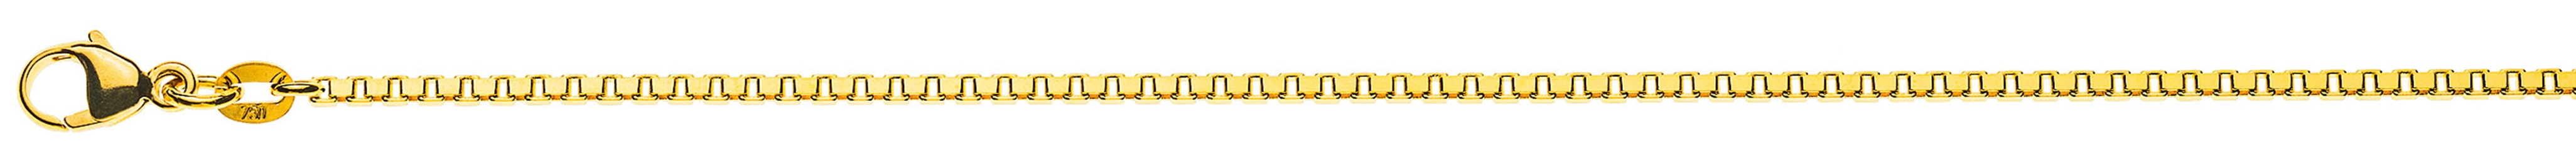 AURONOS Prestige Necklace yellow gold 18K Venetian chain diamond 40cm 1.6mm